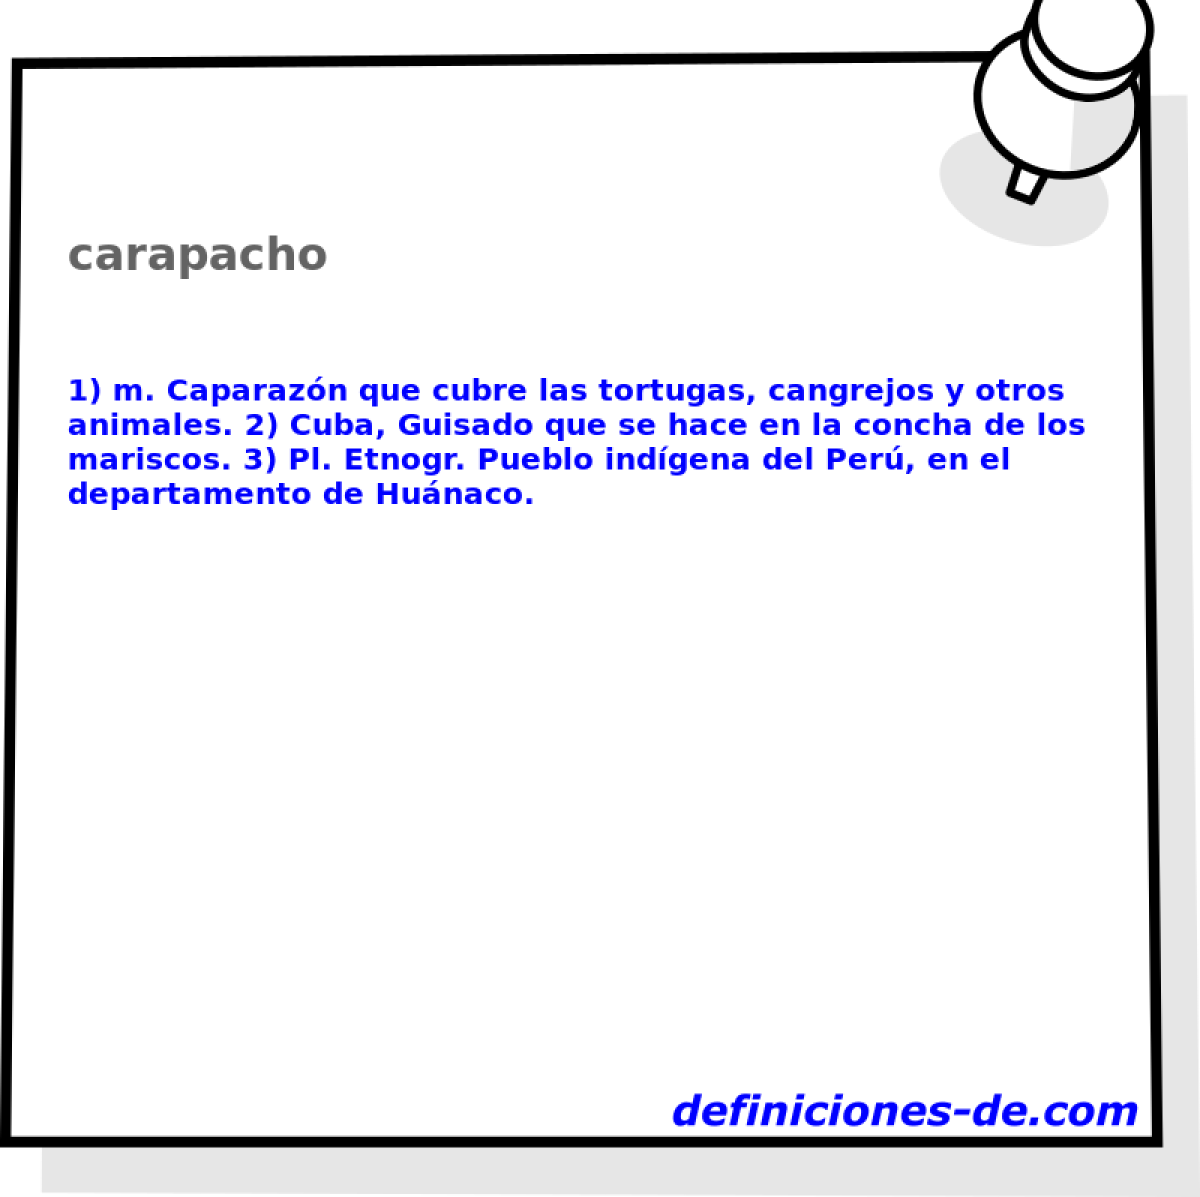 carapacho 